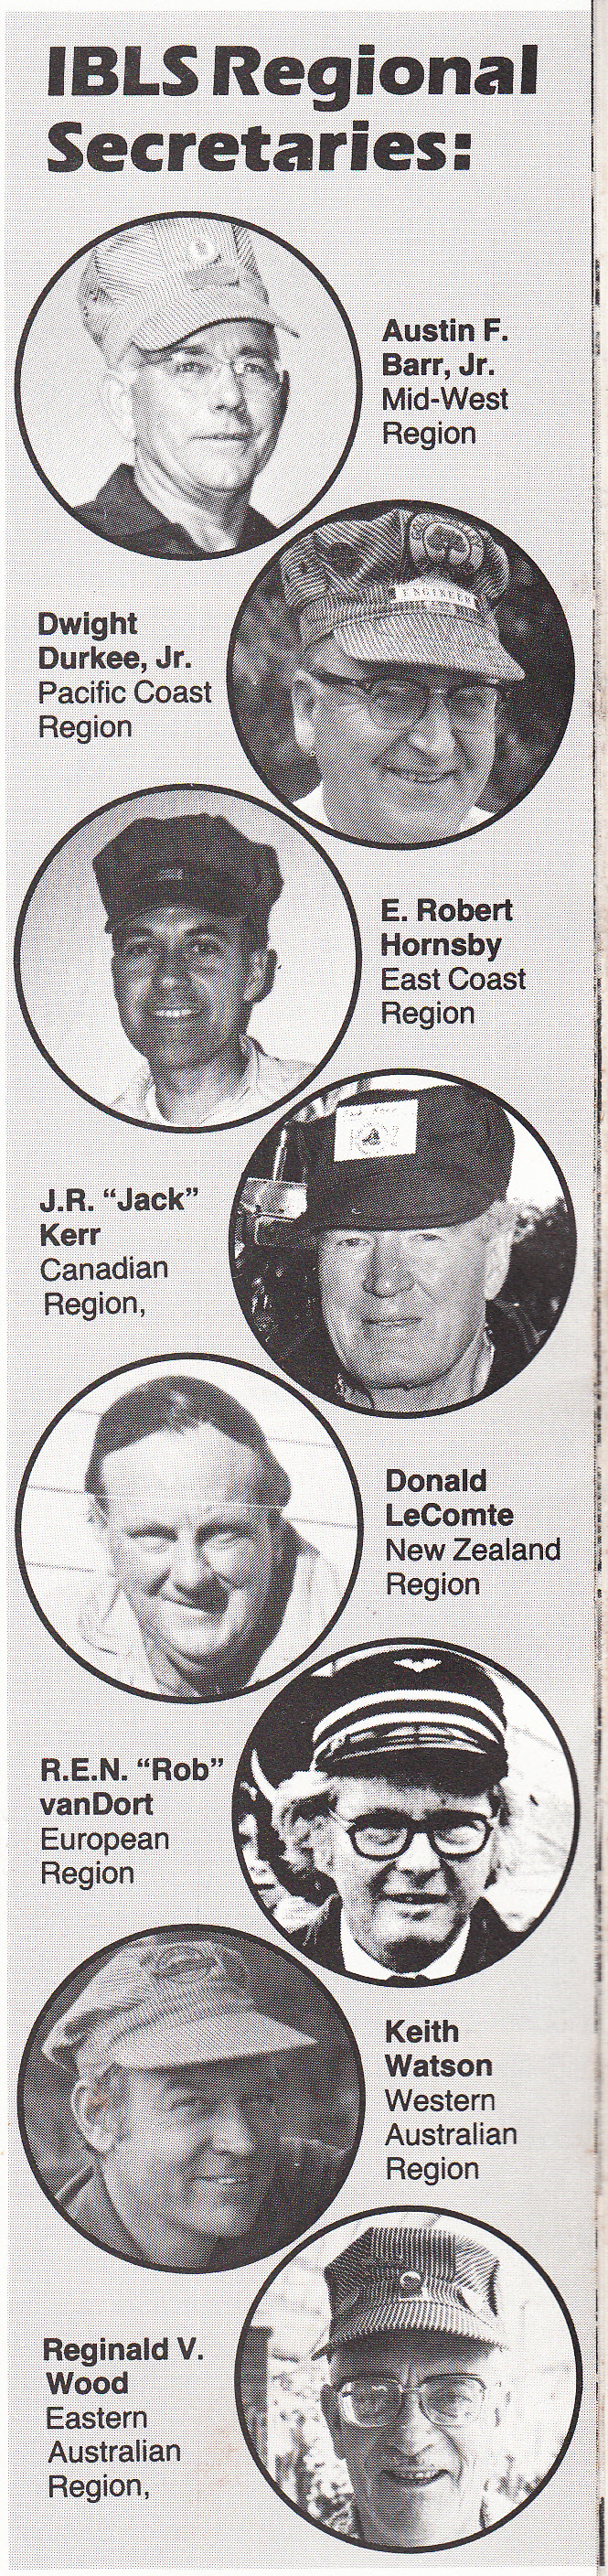 The IBLS Secretaries as of February 1984